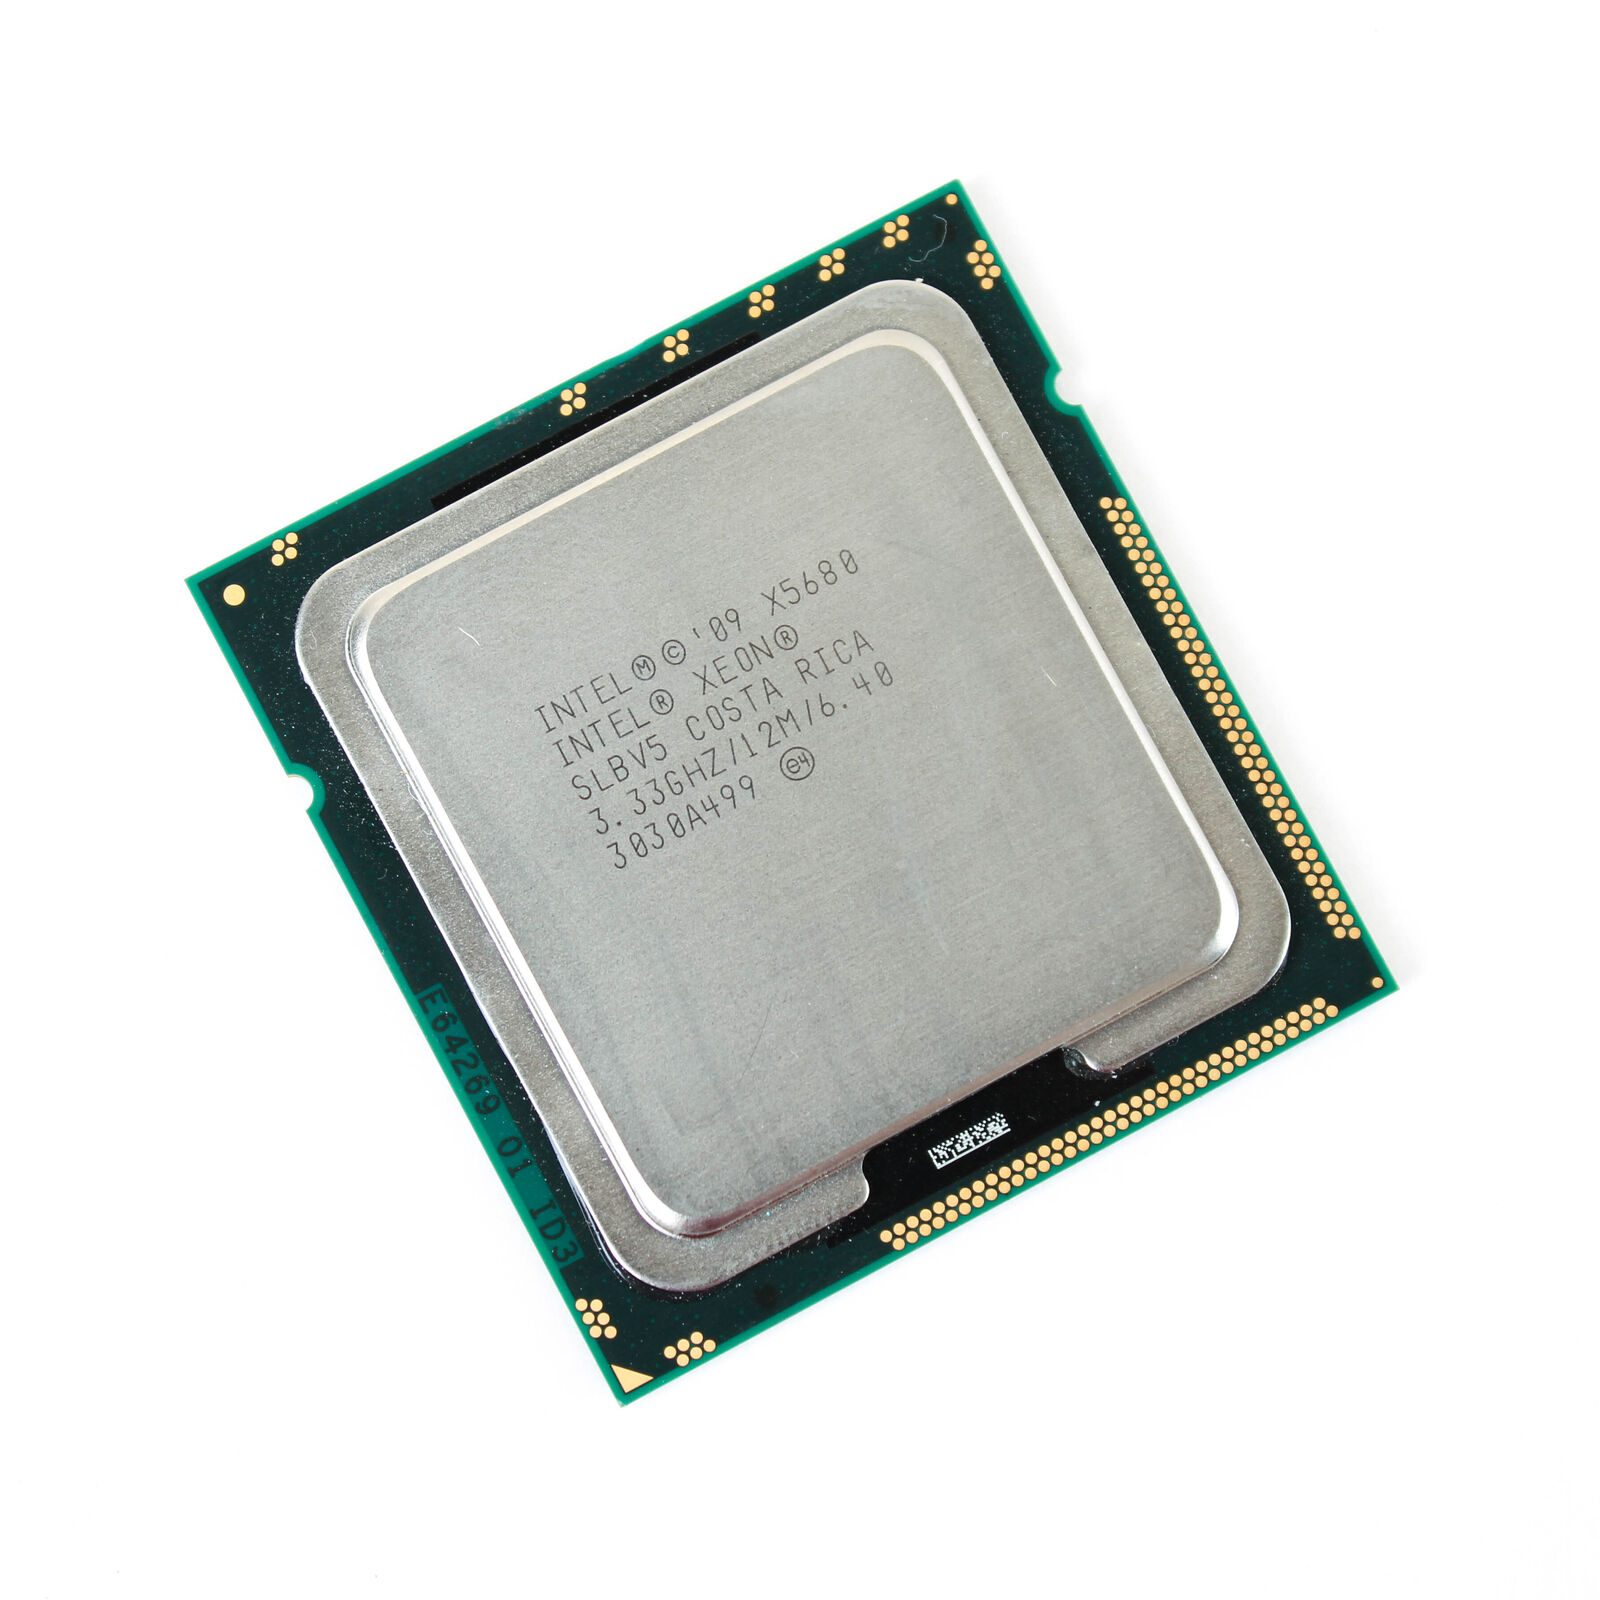 Intel Xeon CPU X5680 3.33GHz 12MB Cache Hexa Core Socket LGA1366 Processor SLBV5